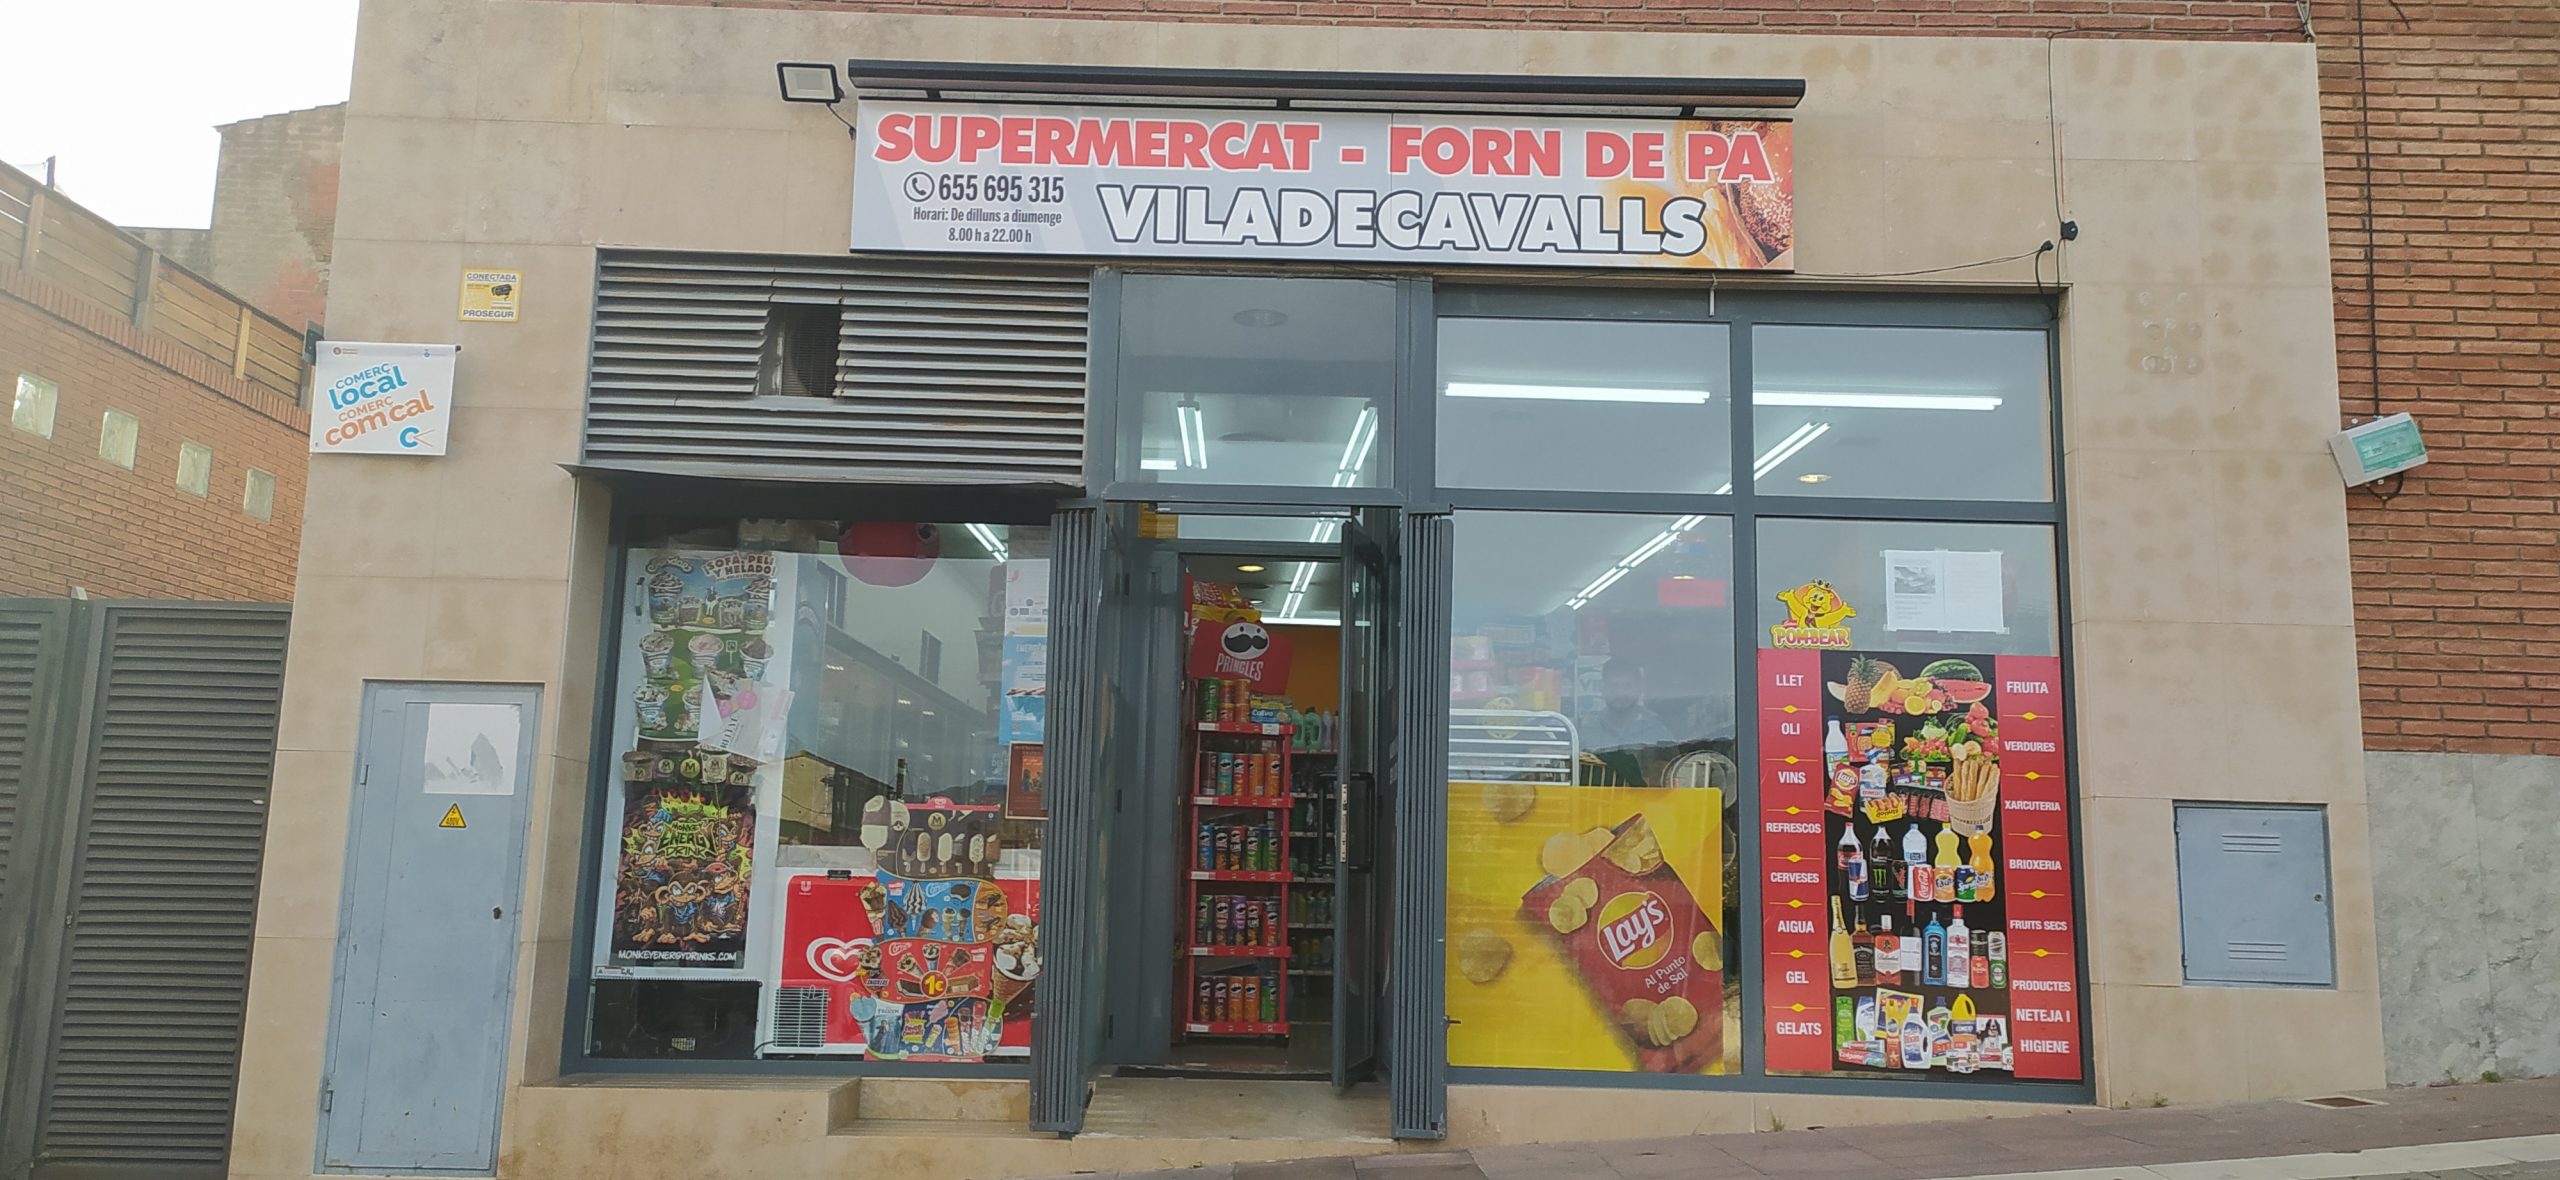 Supermercat Viladecavalls